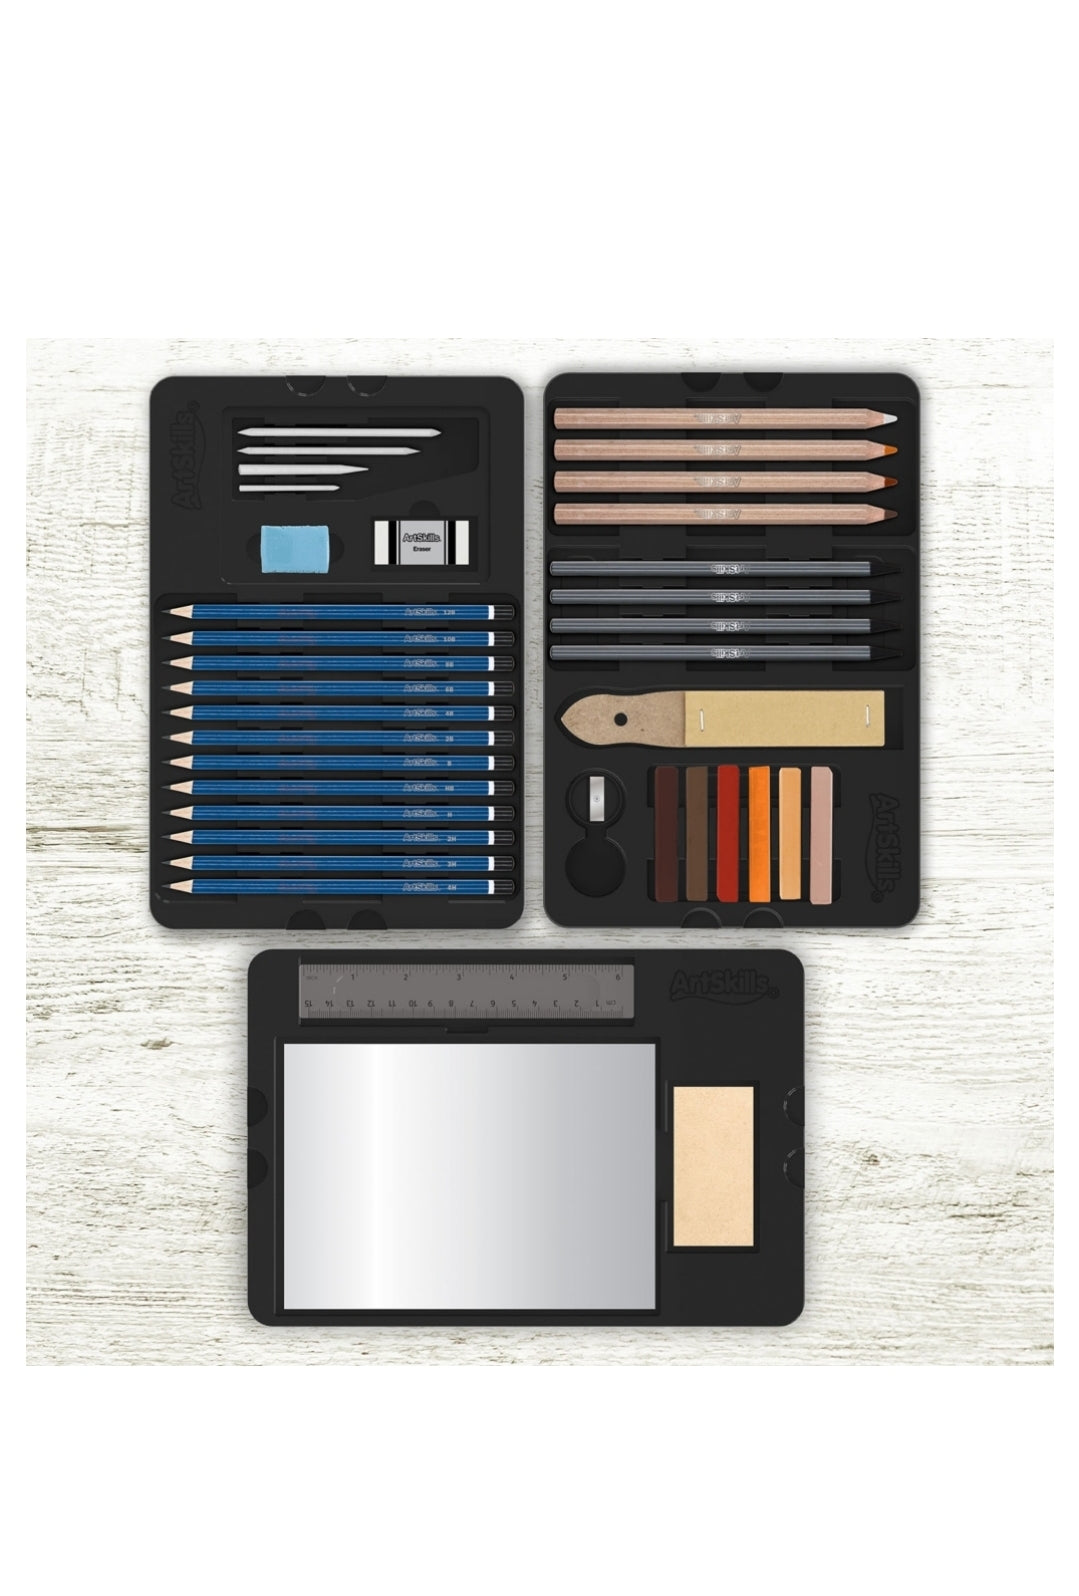 ArtSkills Essential Portable Premium Art Supply Kit, 200 Pieces, 1